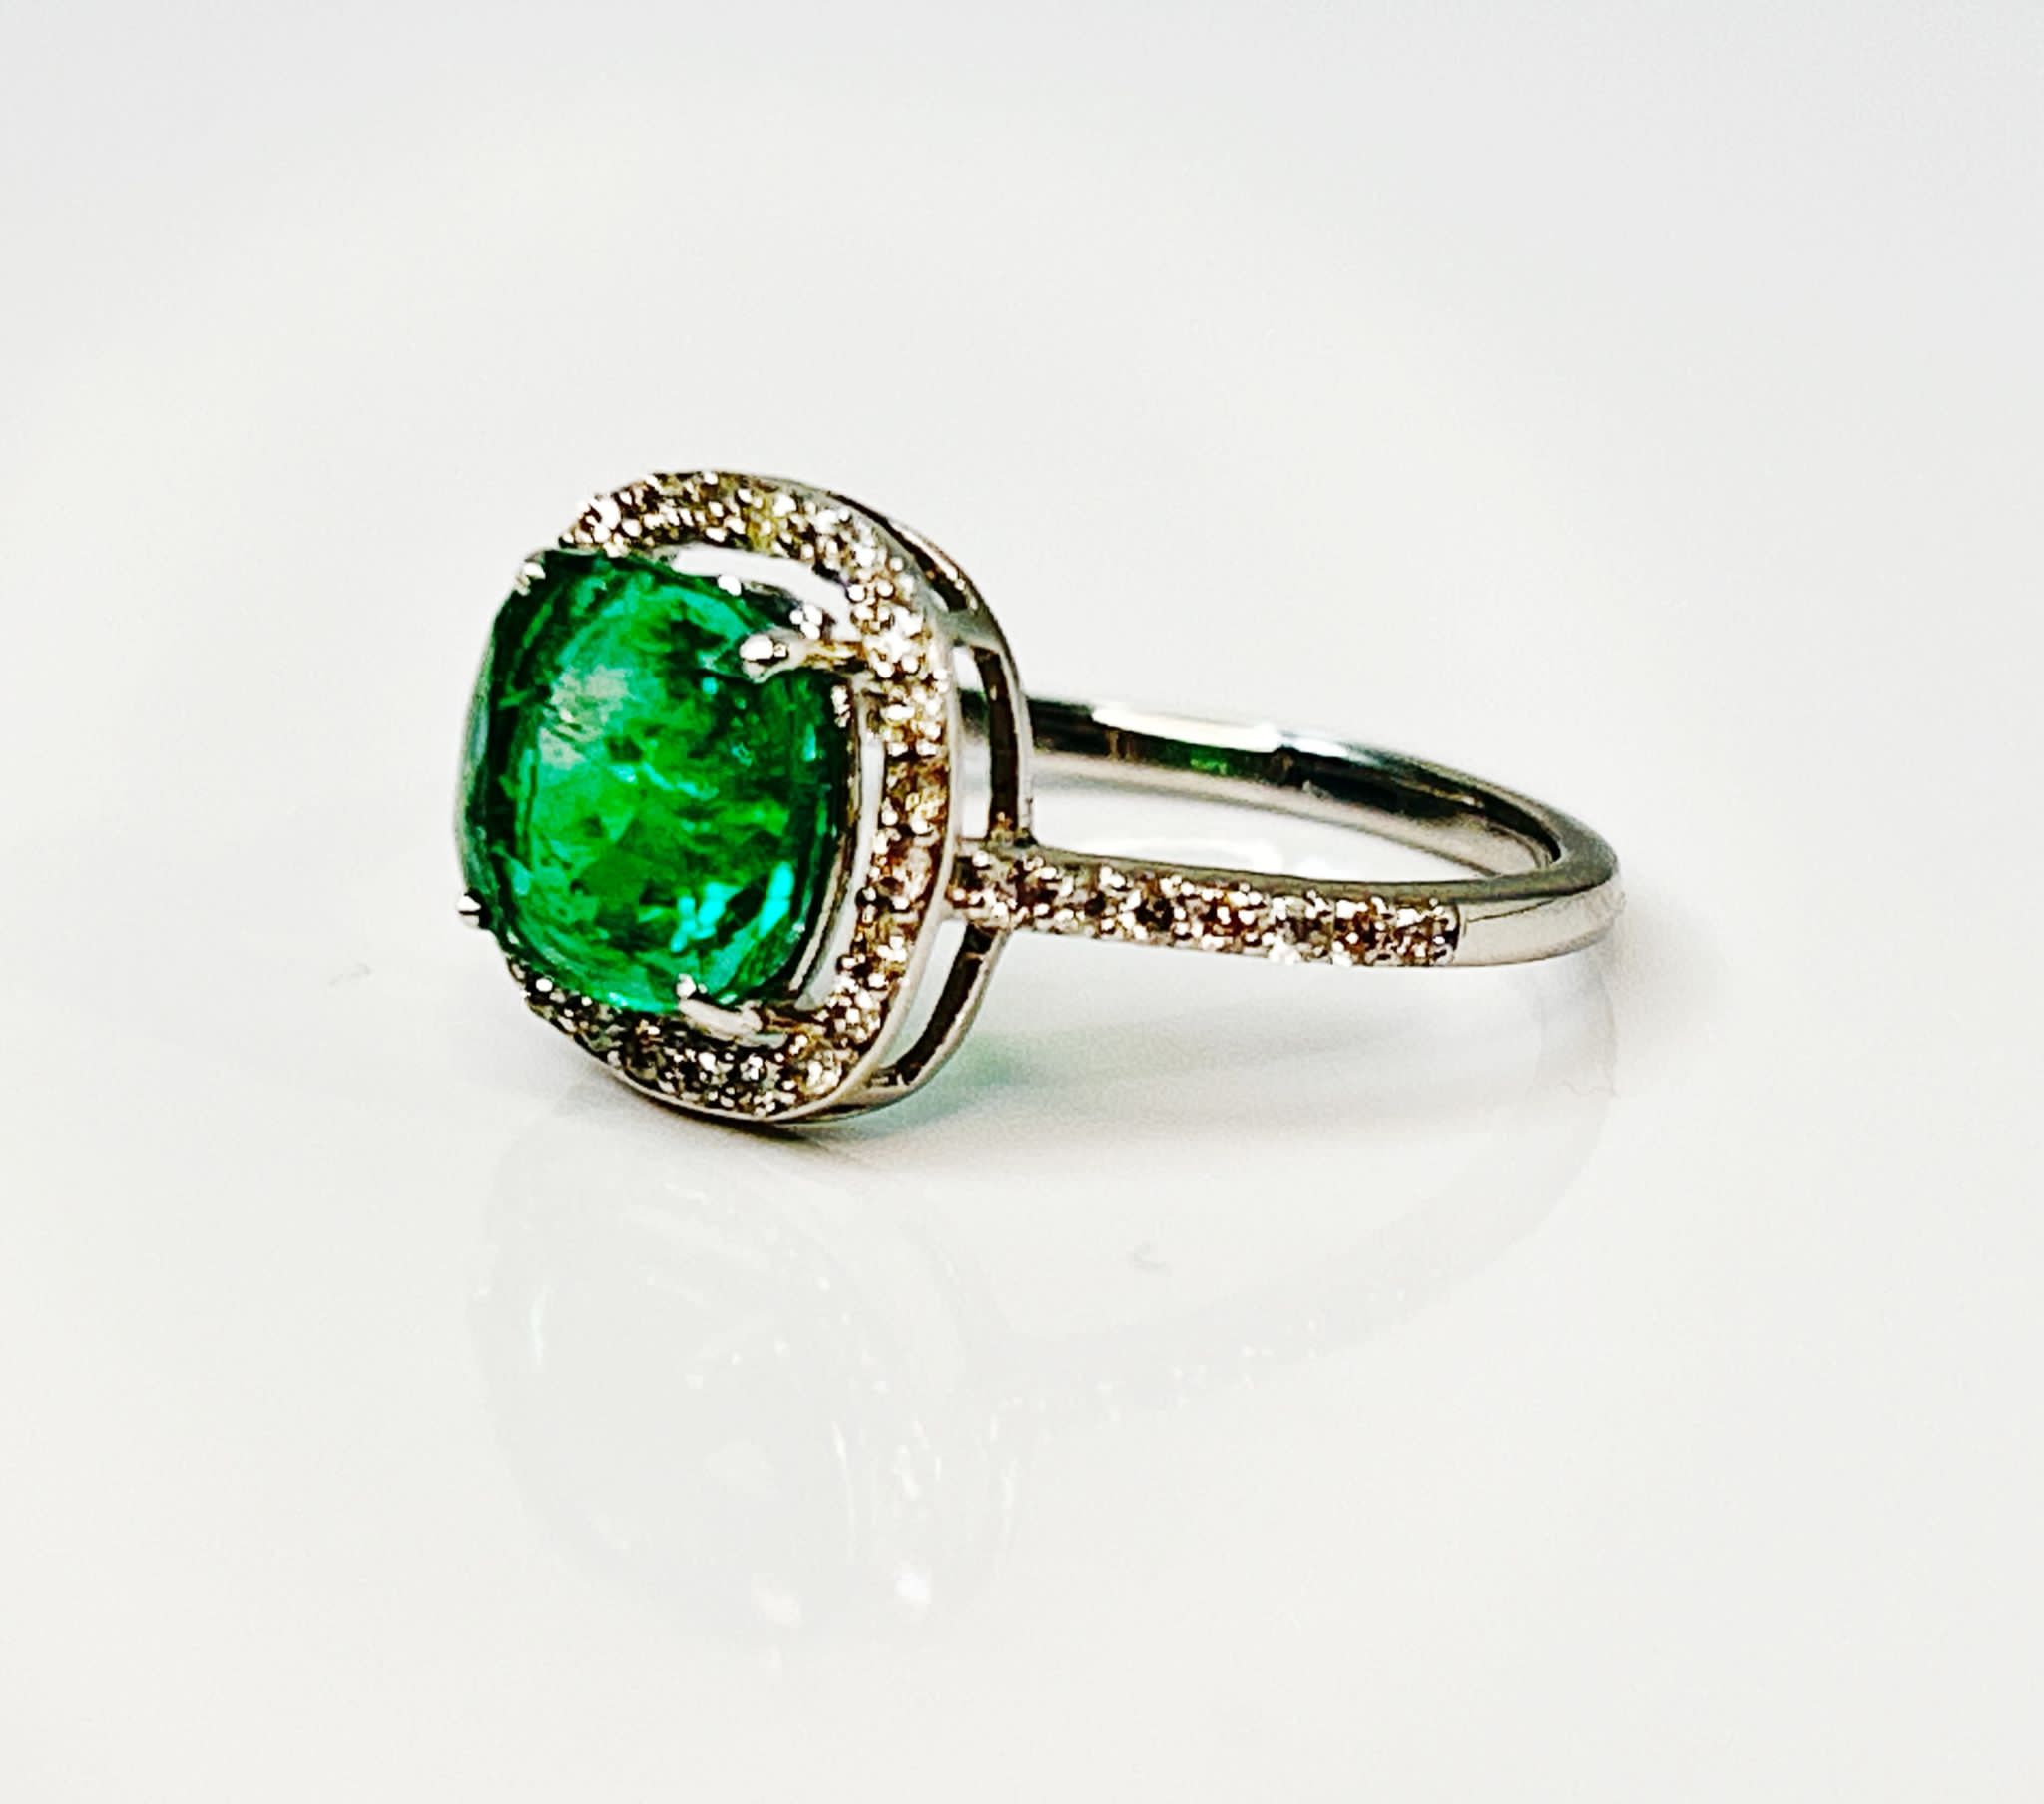 Beautiful 1.69 CT Natural Emerald Ring With Natural Diamonds & Platinum 950 - Image 3 of 5